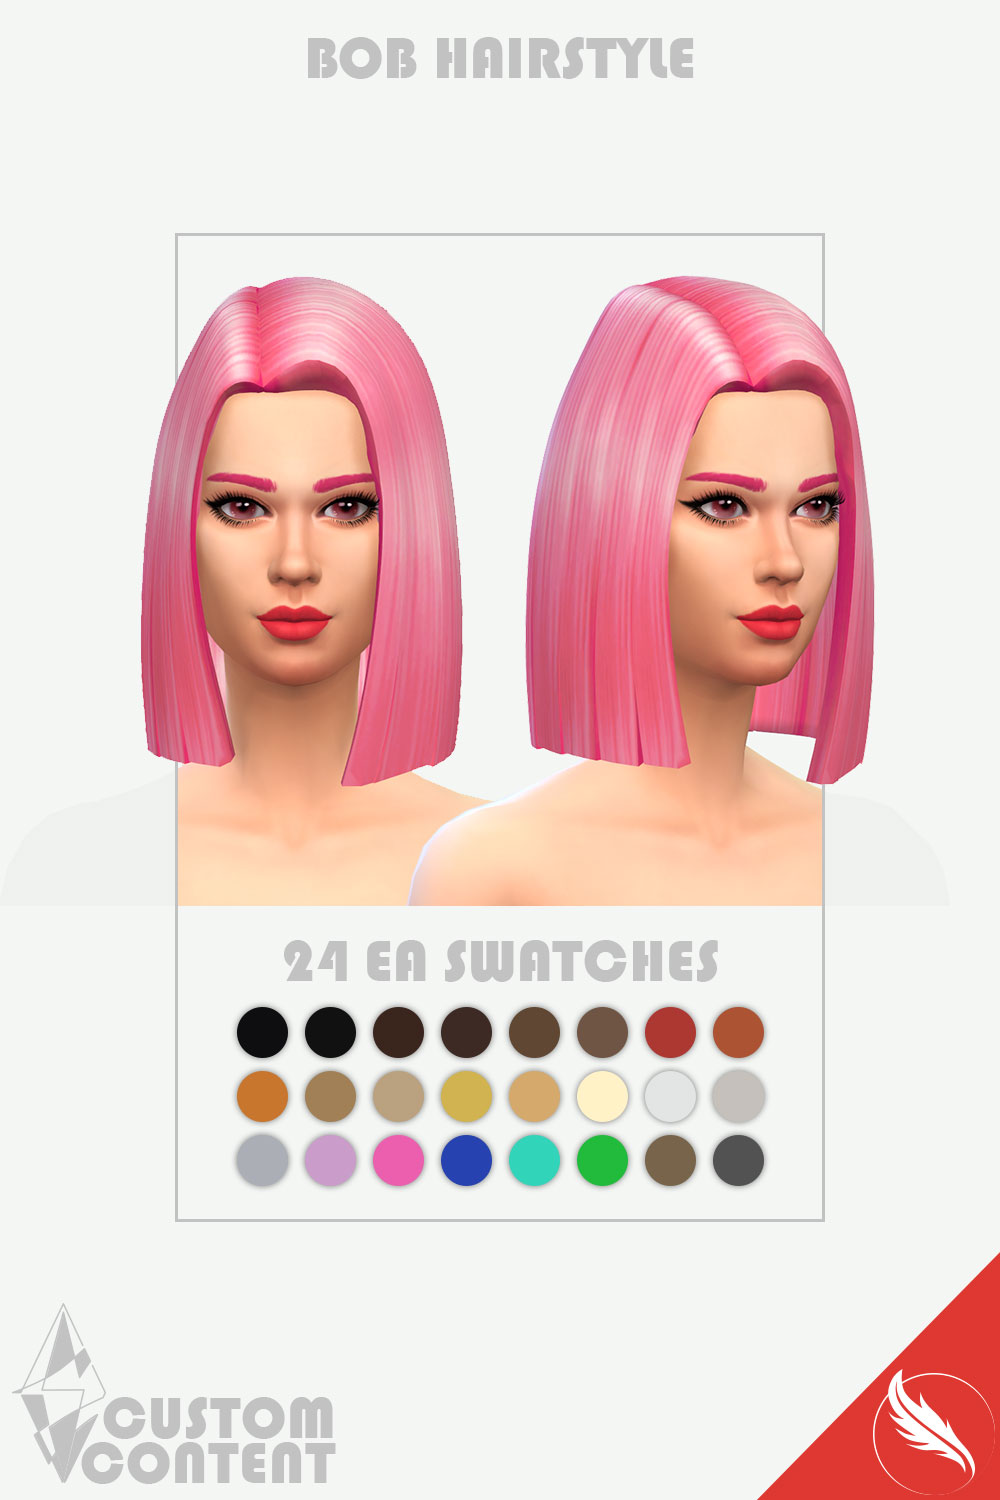 The Sims 4 Bob Hair Custom Content